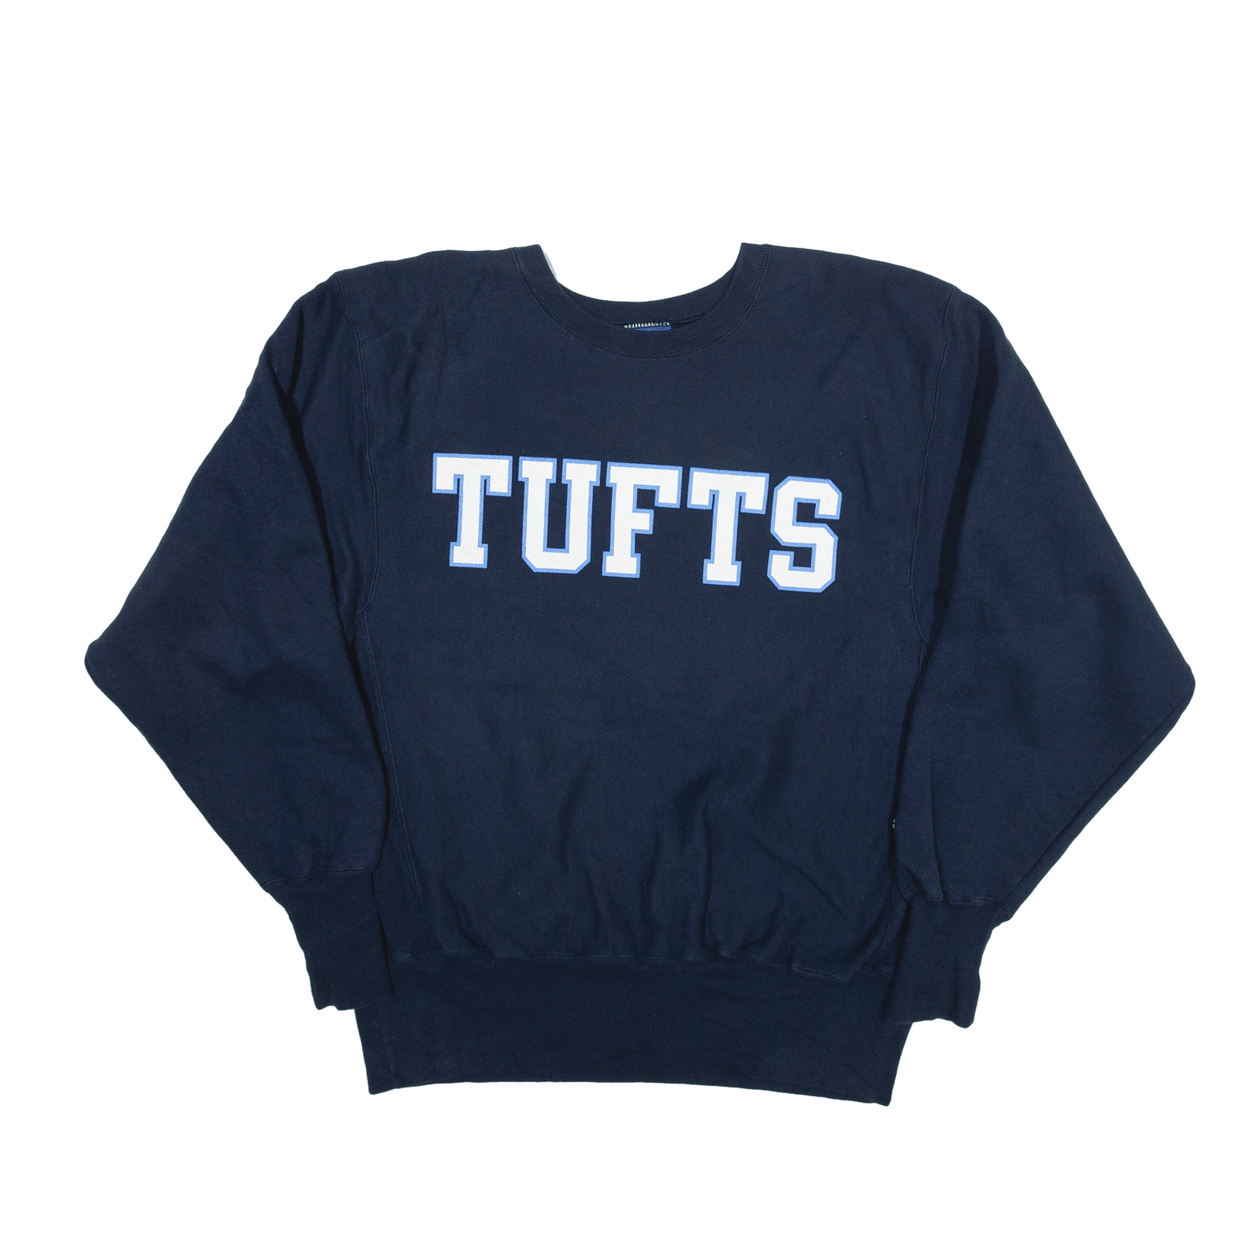 USA CHAMPION Sweatshirt – Mens M Crew Cerqular Neck Blue University Tufts